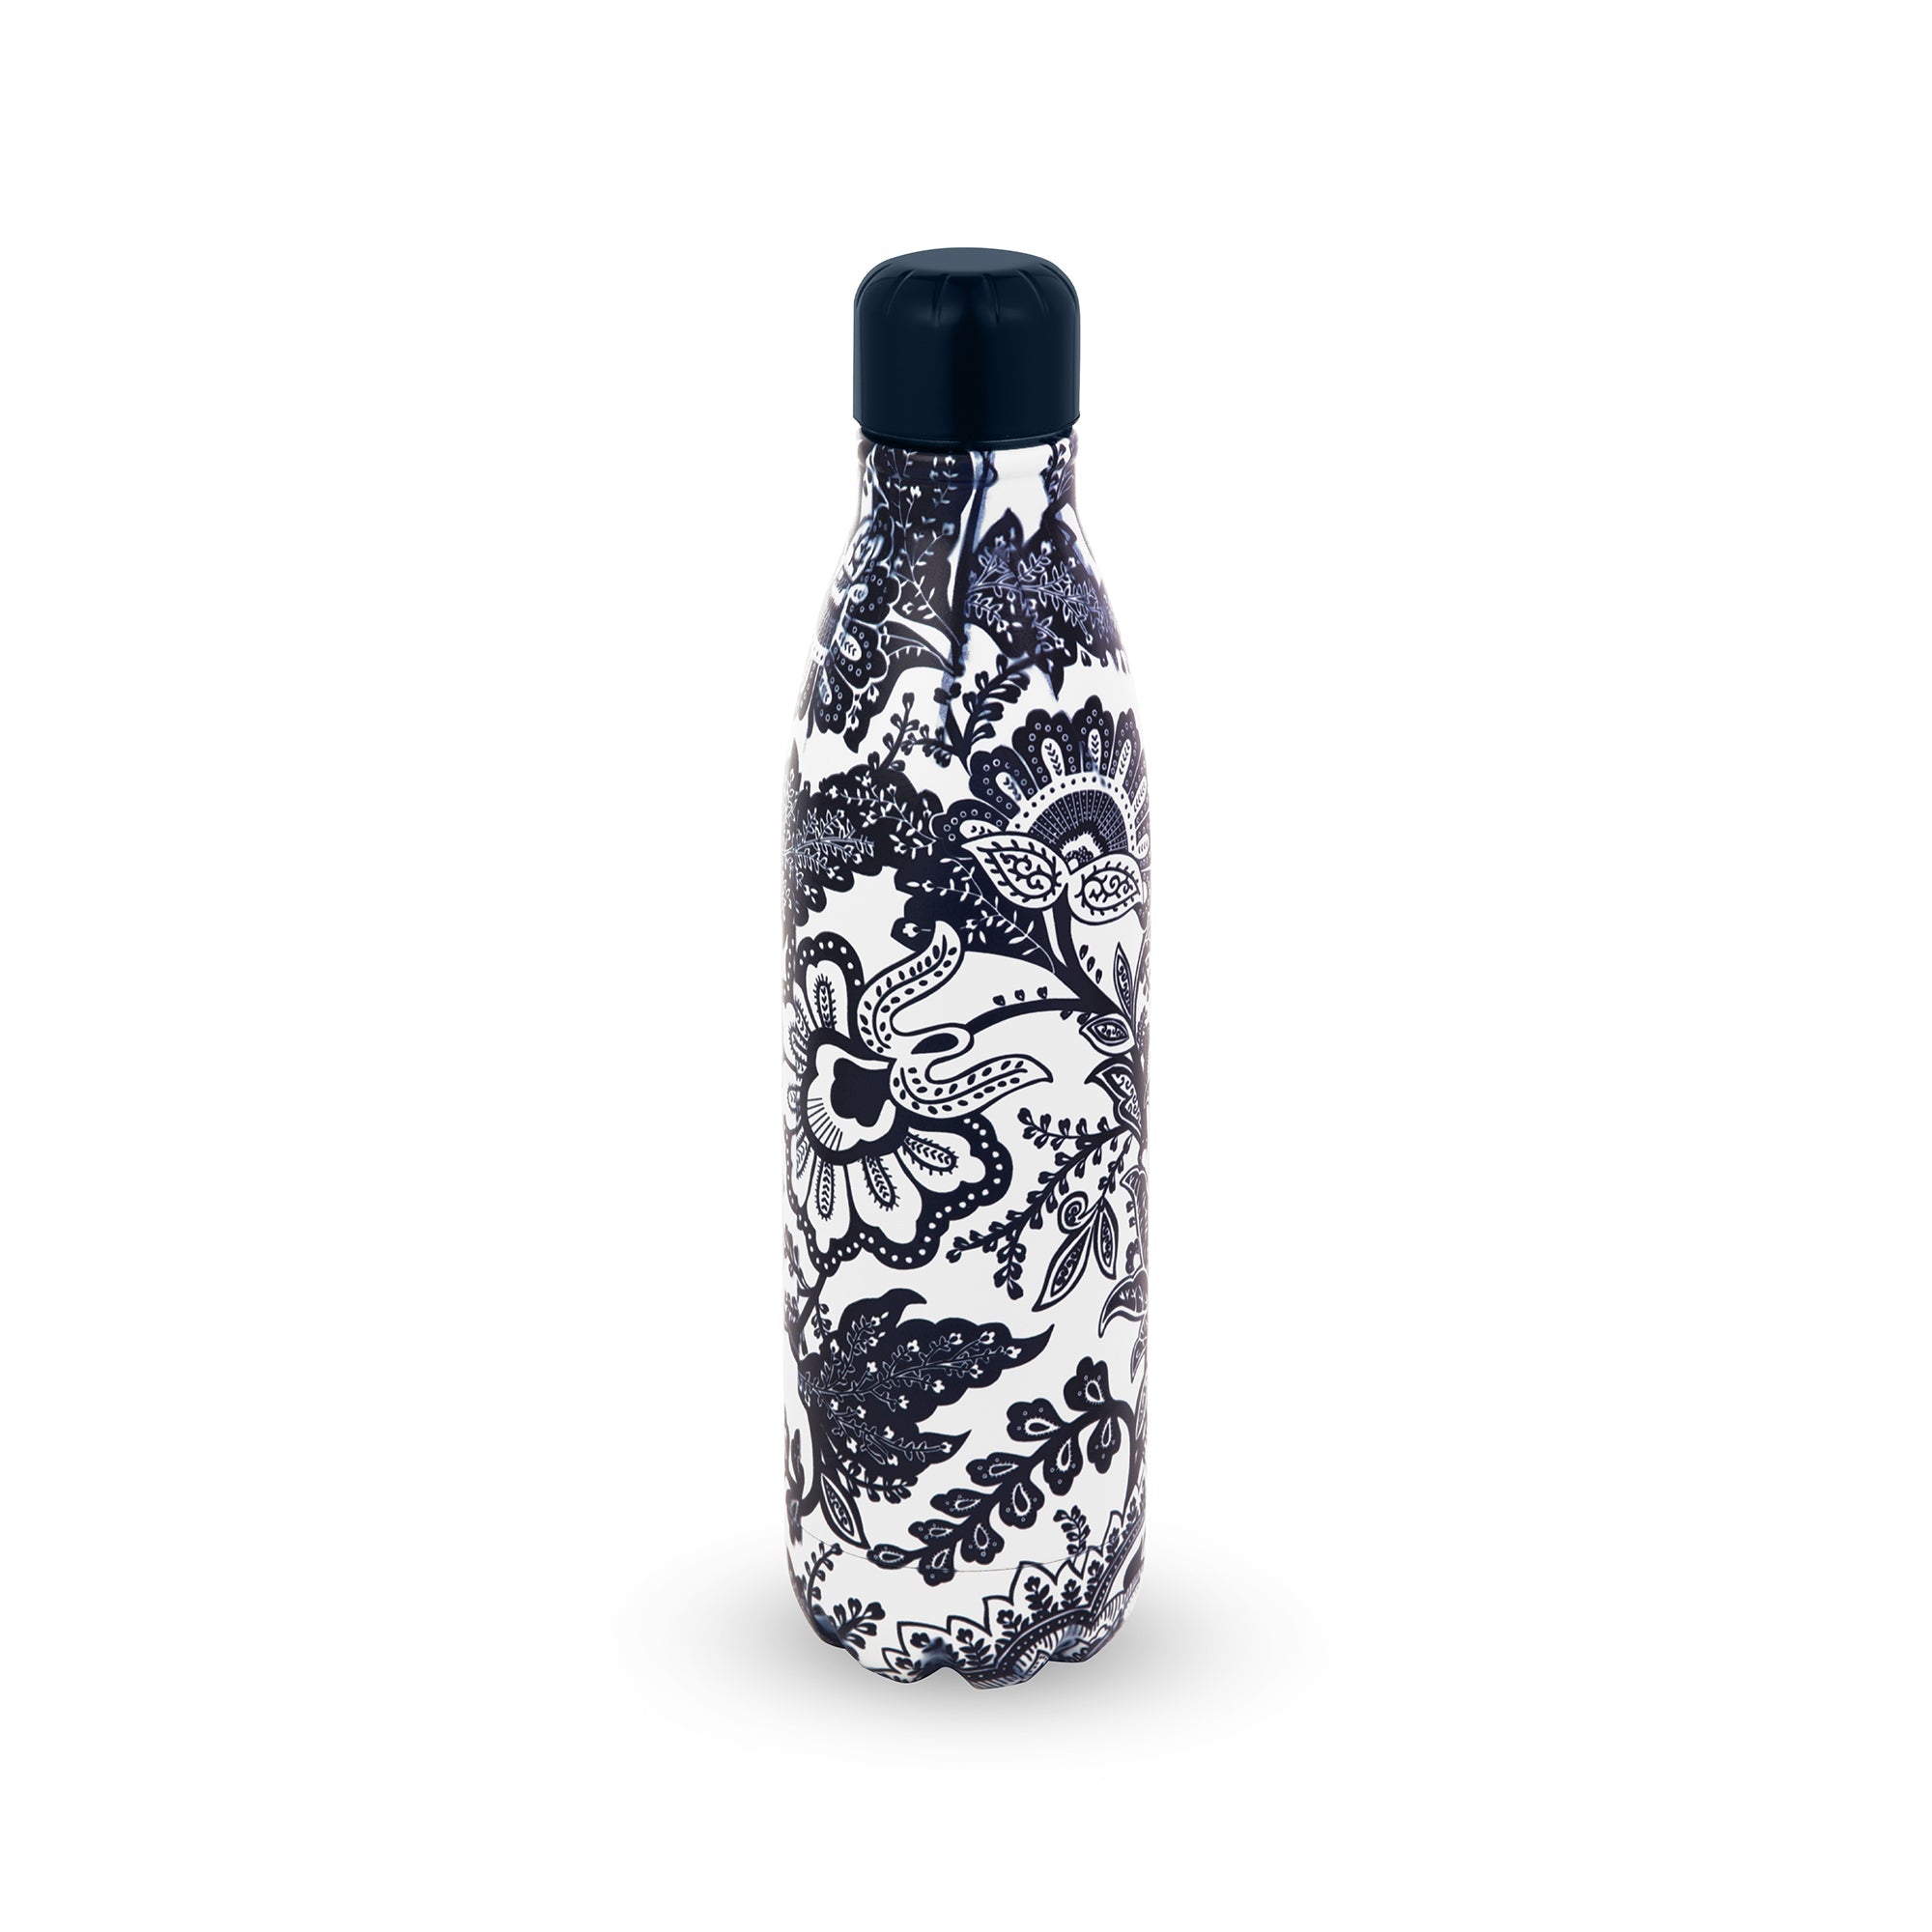 Stainless Steel Water Bottle, Java Navy White - Lifeguard Press